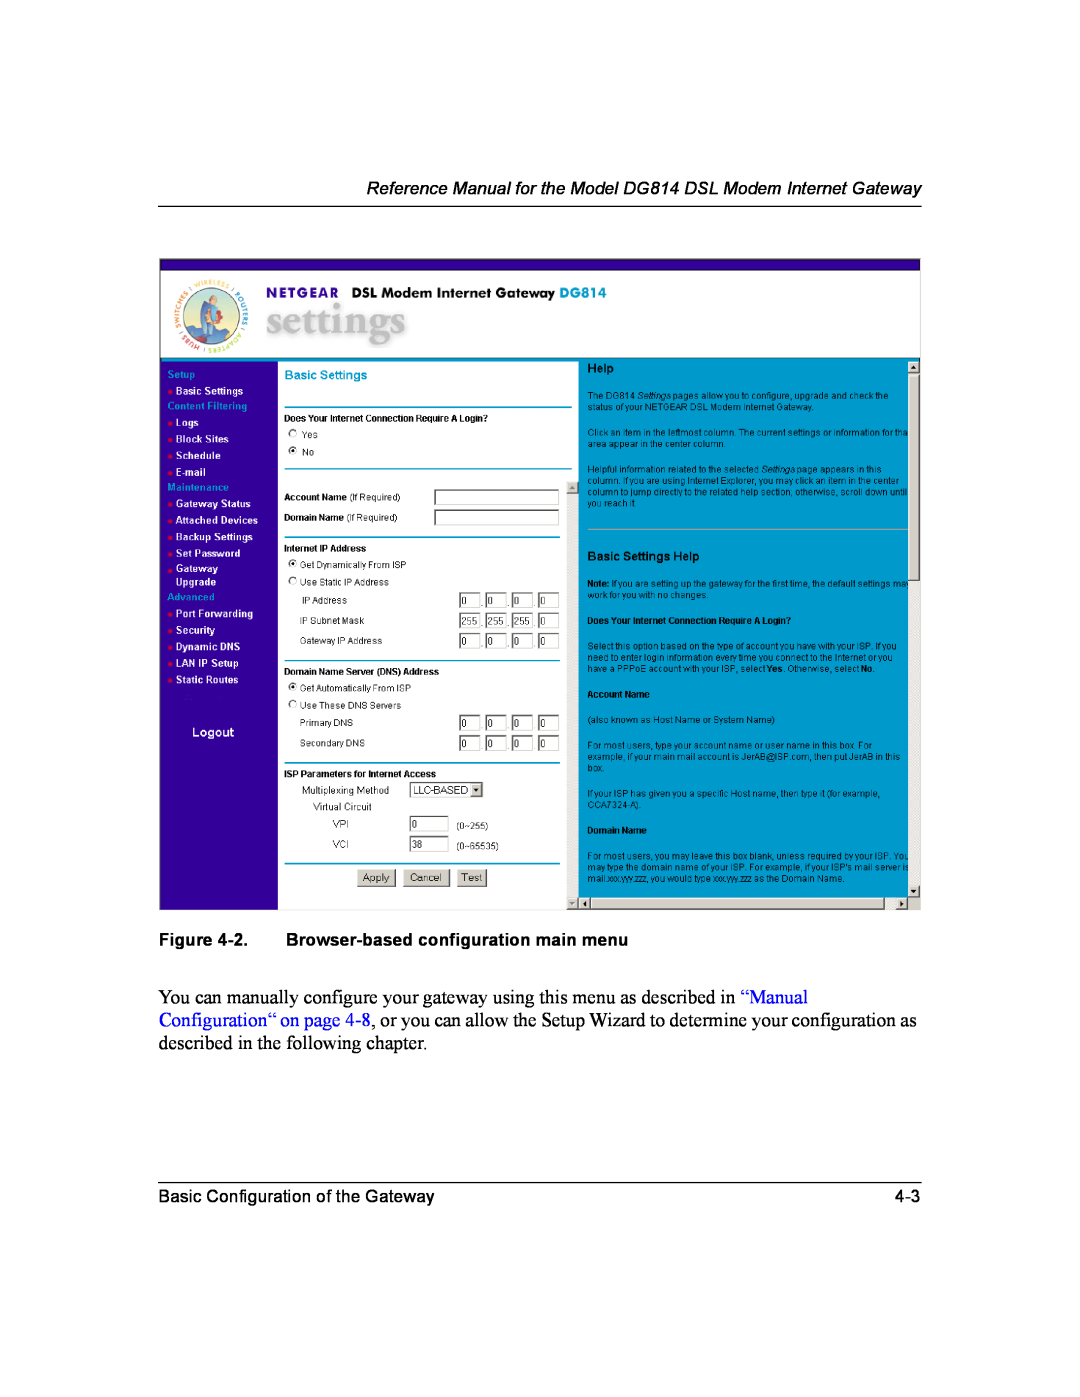 NETGEAR manual Reference Manual for the Model DG814 DSL Modem Internet Gateway, 2. Browser-based configuration main menu 